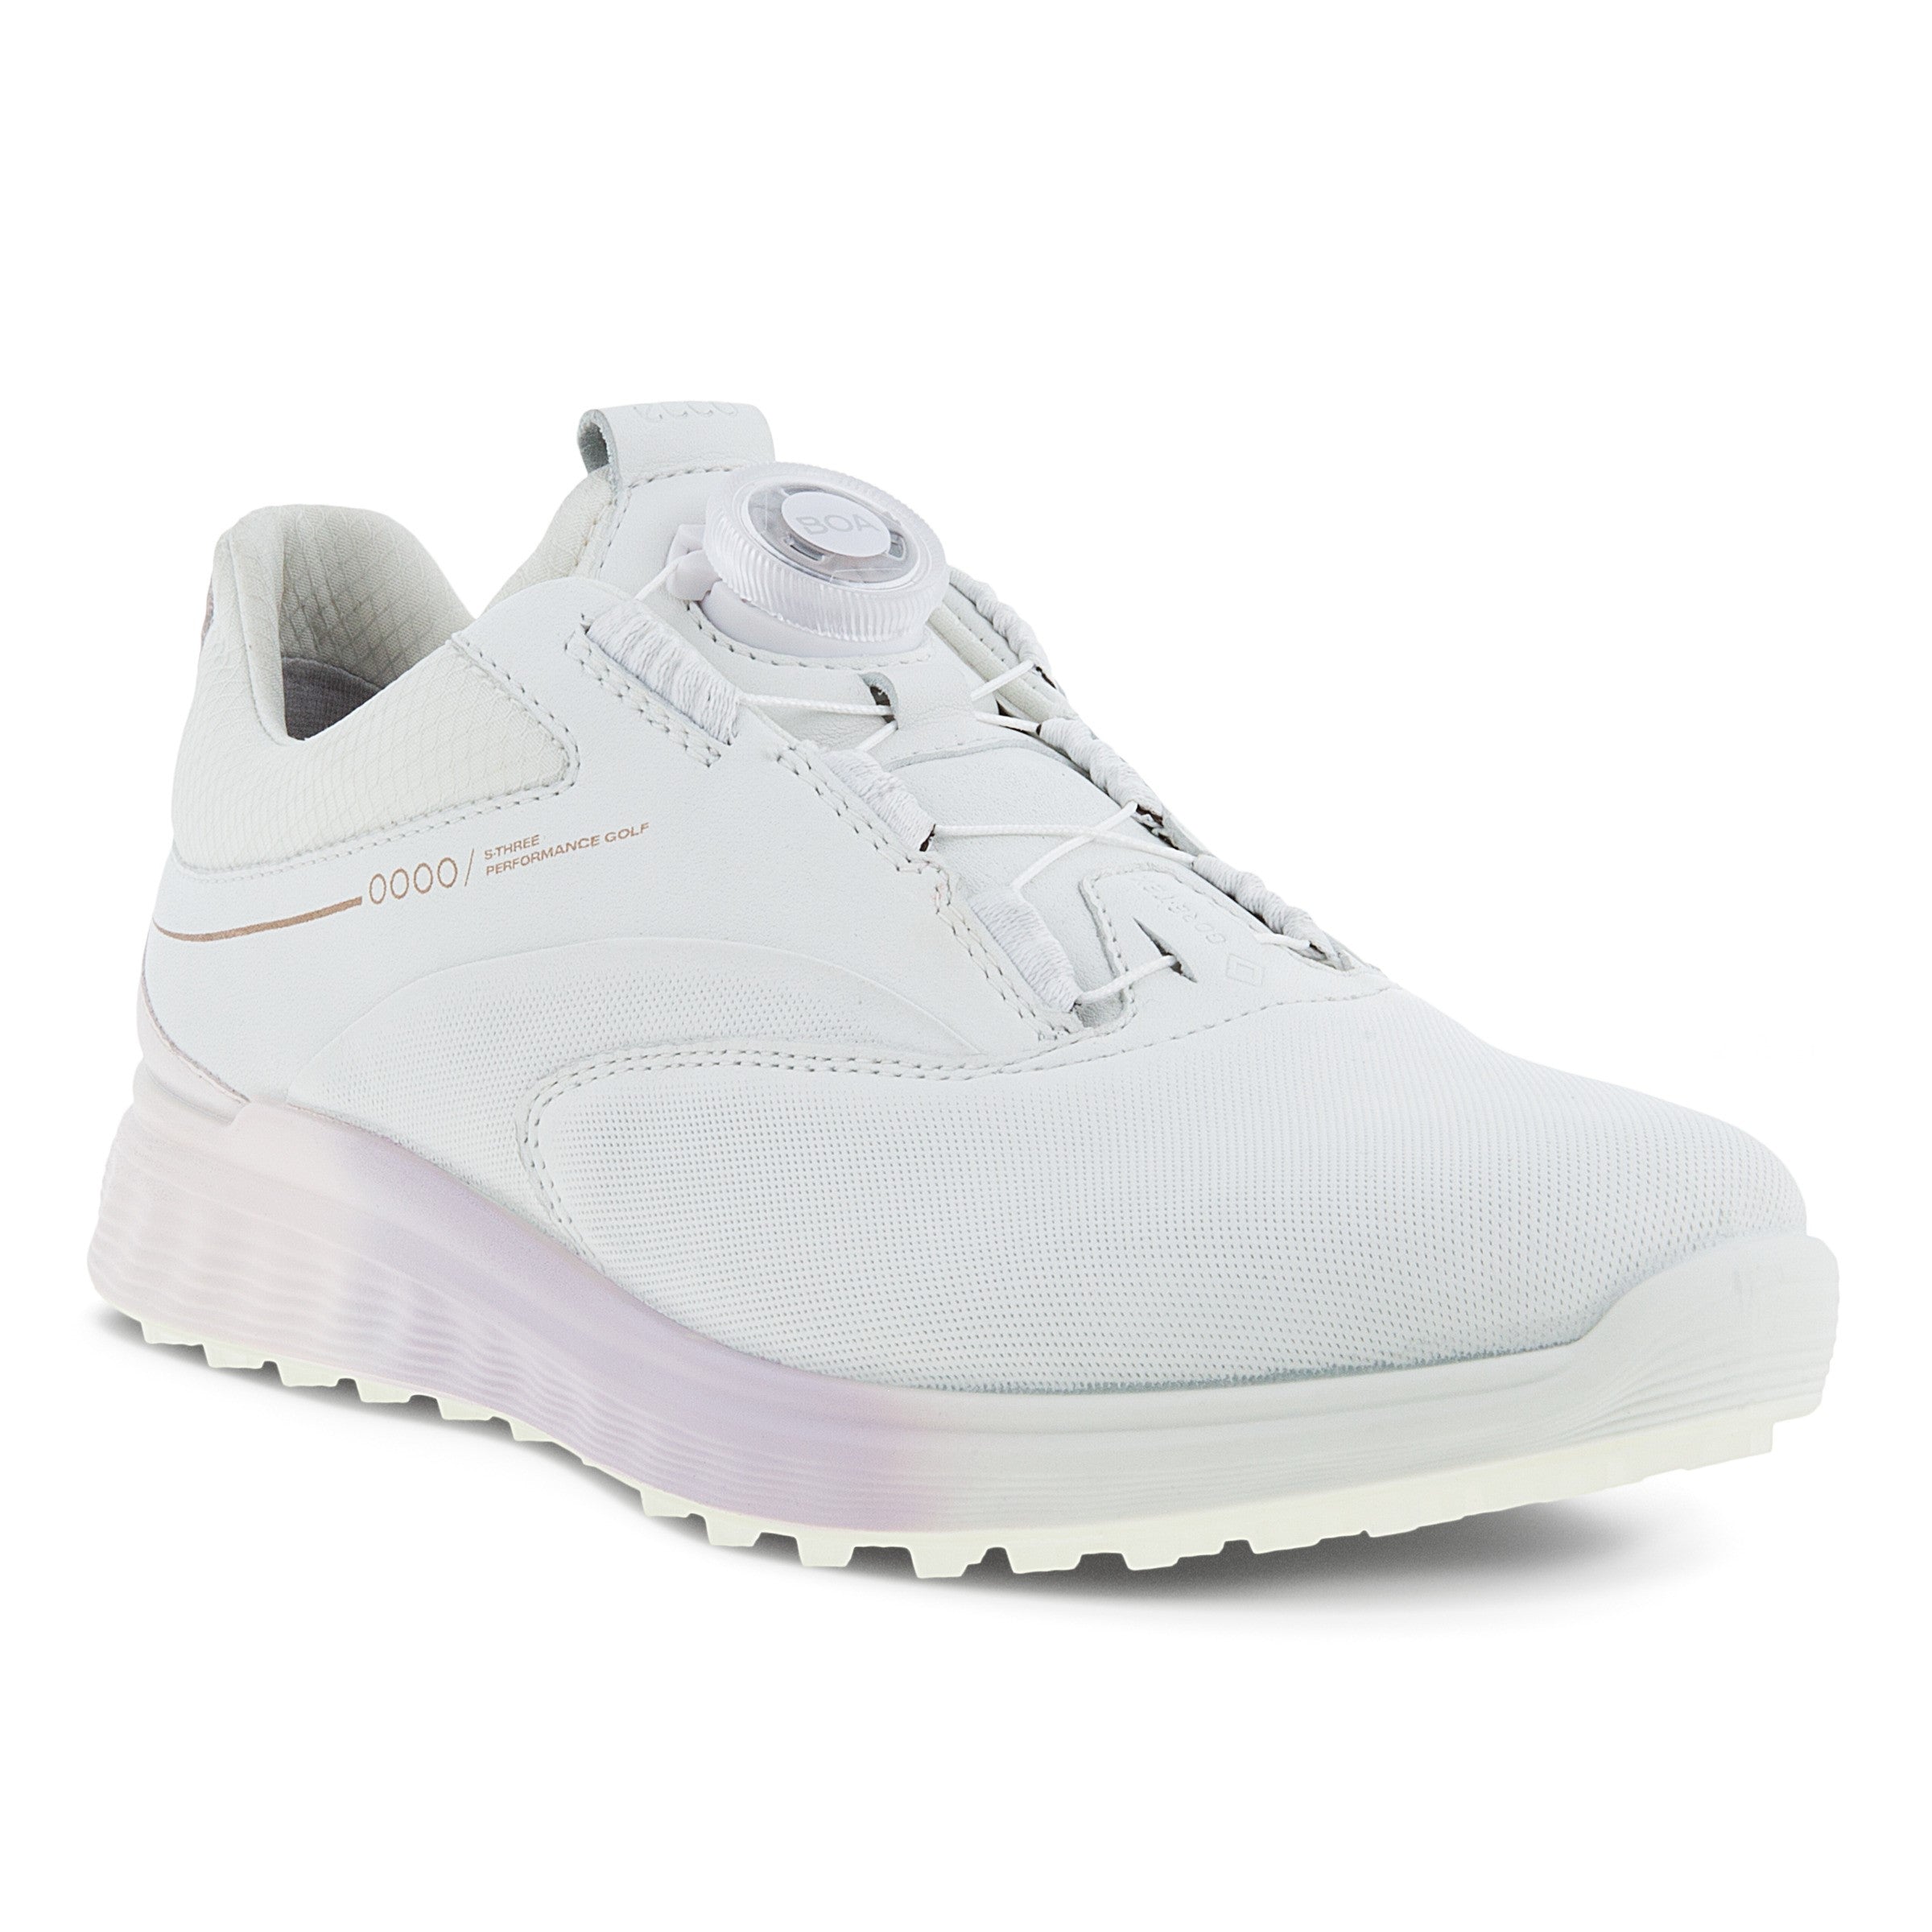 Ecco Ladies S Three BOA Golf Shoes